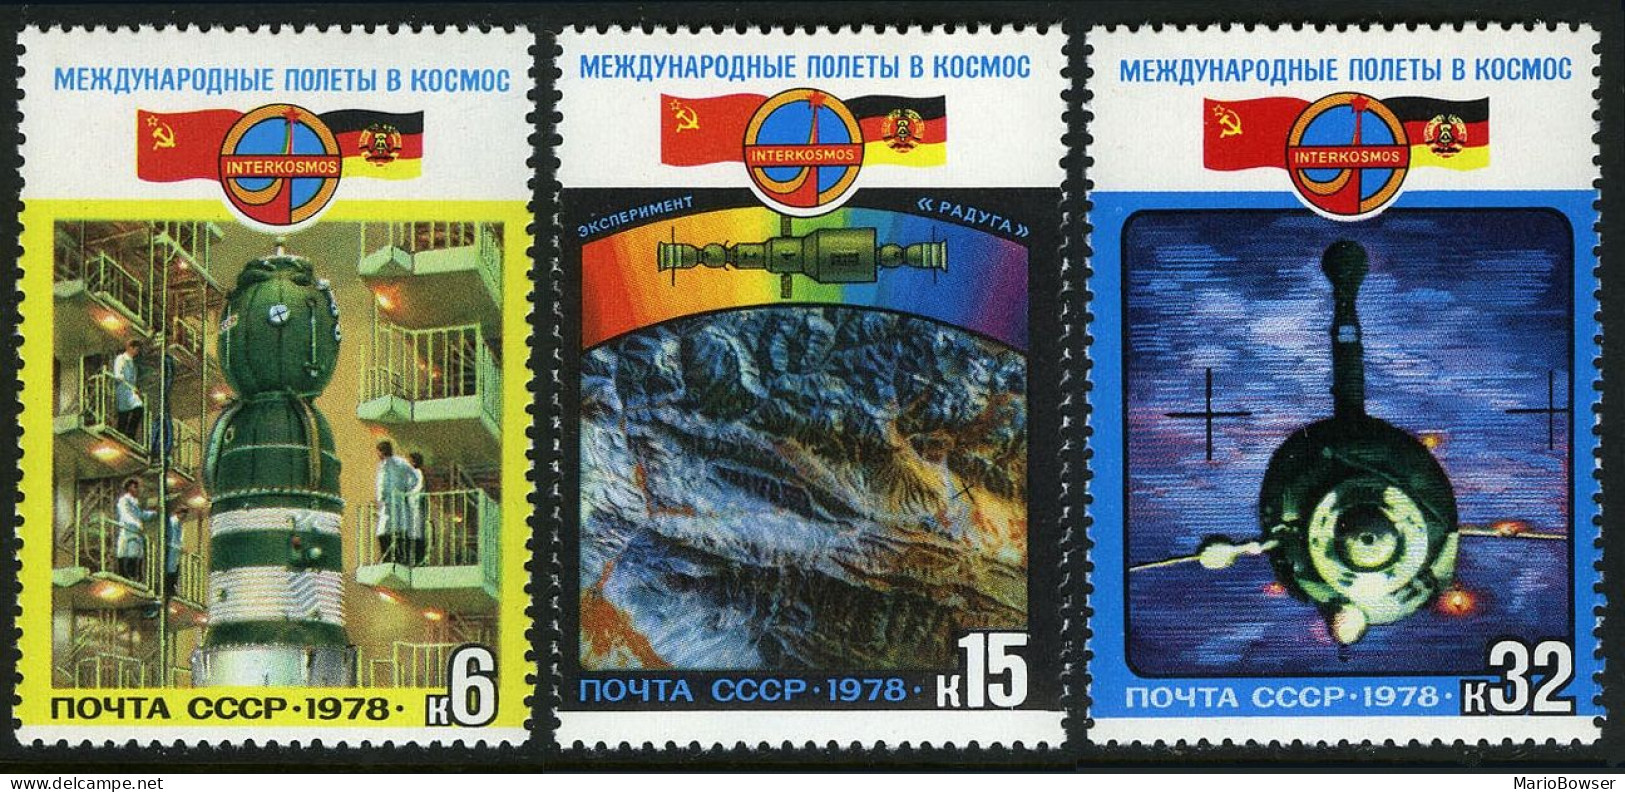 Russia 4690-4692, MNH. Mi 4763-4765. USSR-GDR Space Cooperation, 1978. Salyut 6, - Unused Stamps